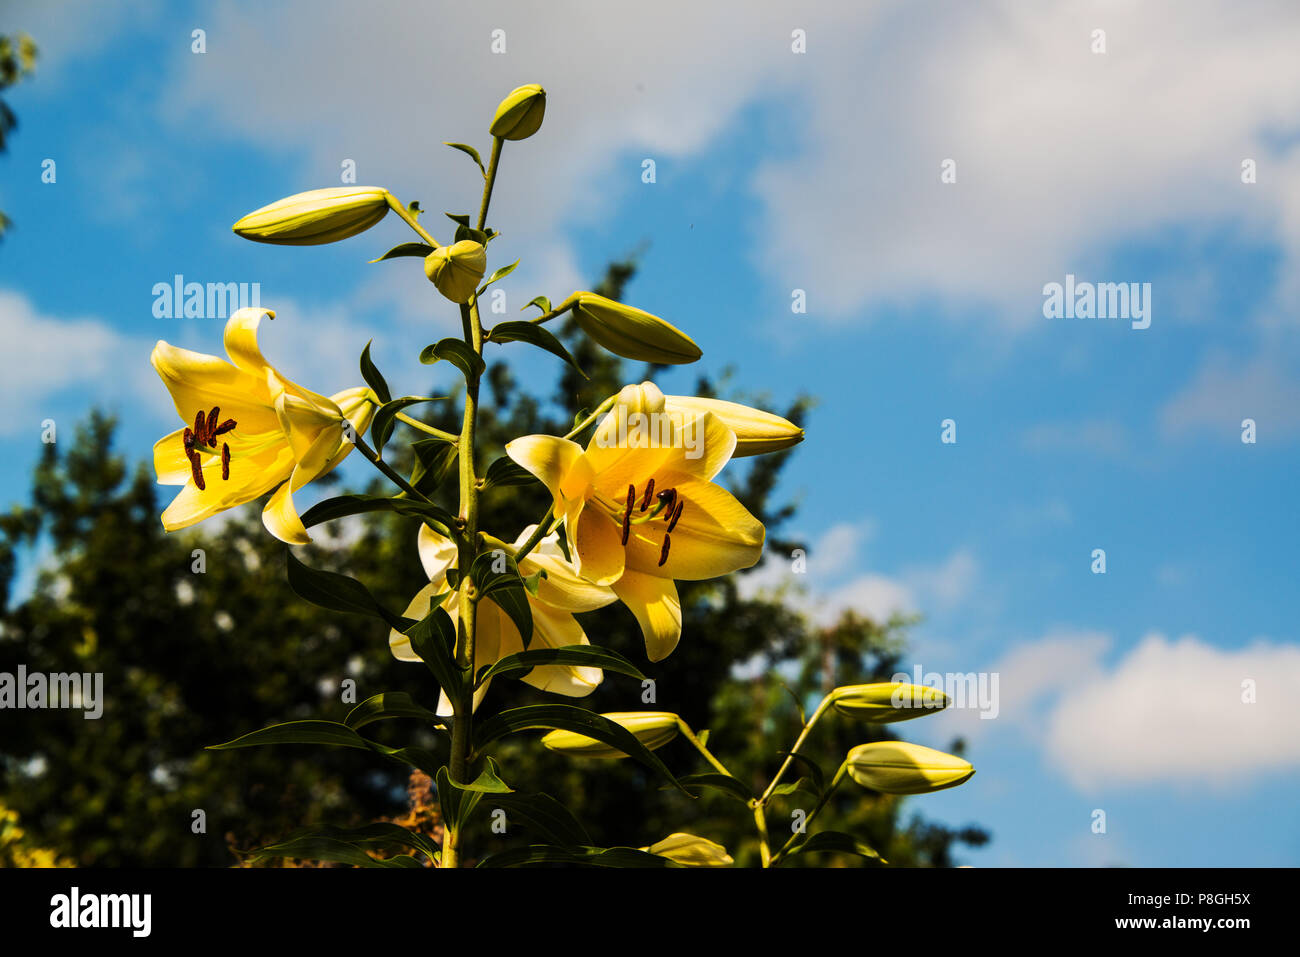 Giant Lily 'yellow rocket'. Stock Photo